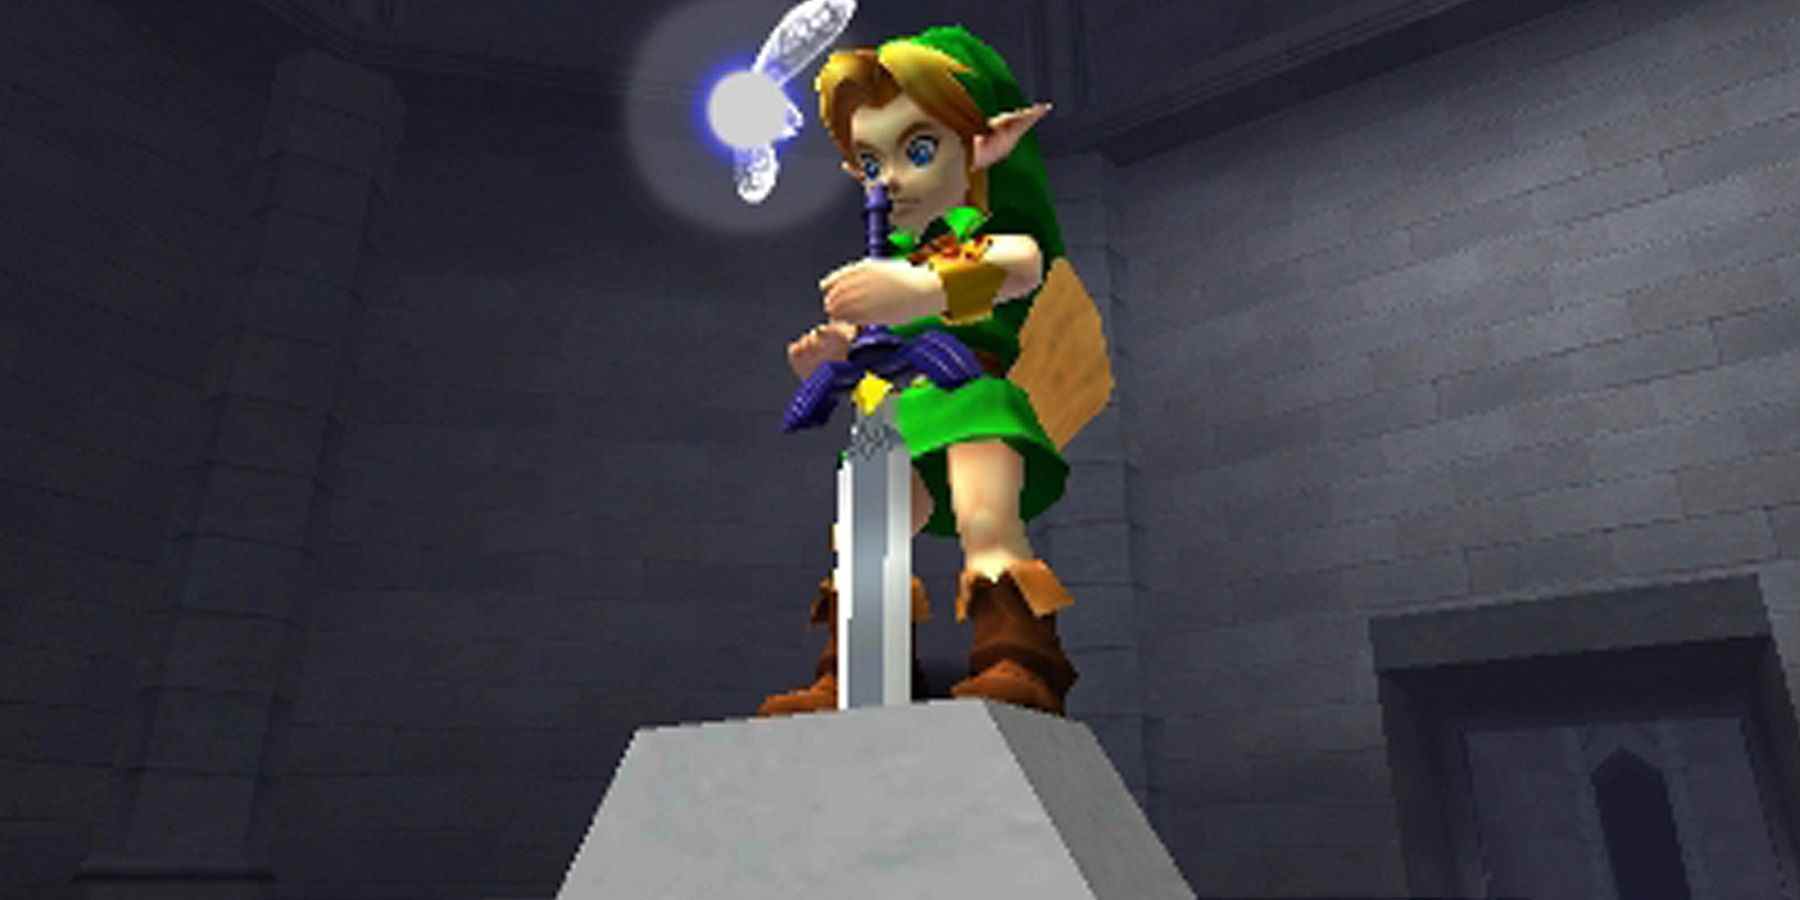 Image de The Legend of Zelda: Ocarina of Time, montrant Link libérant l'épée maîtresse.